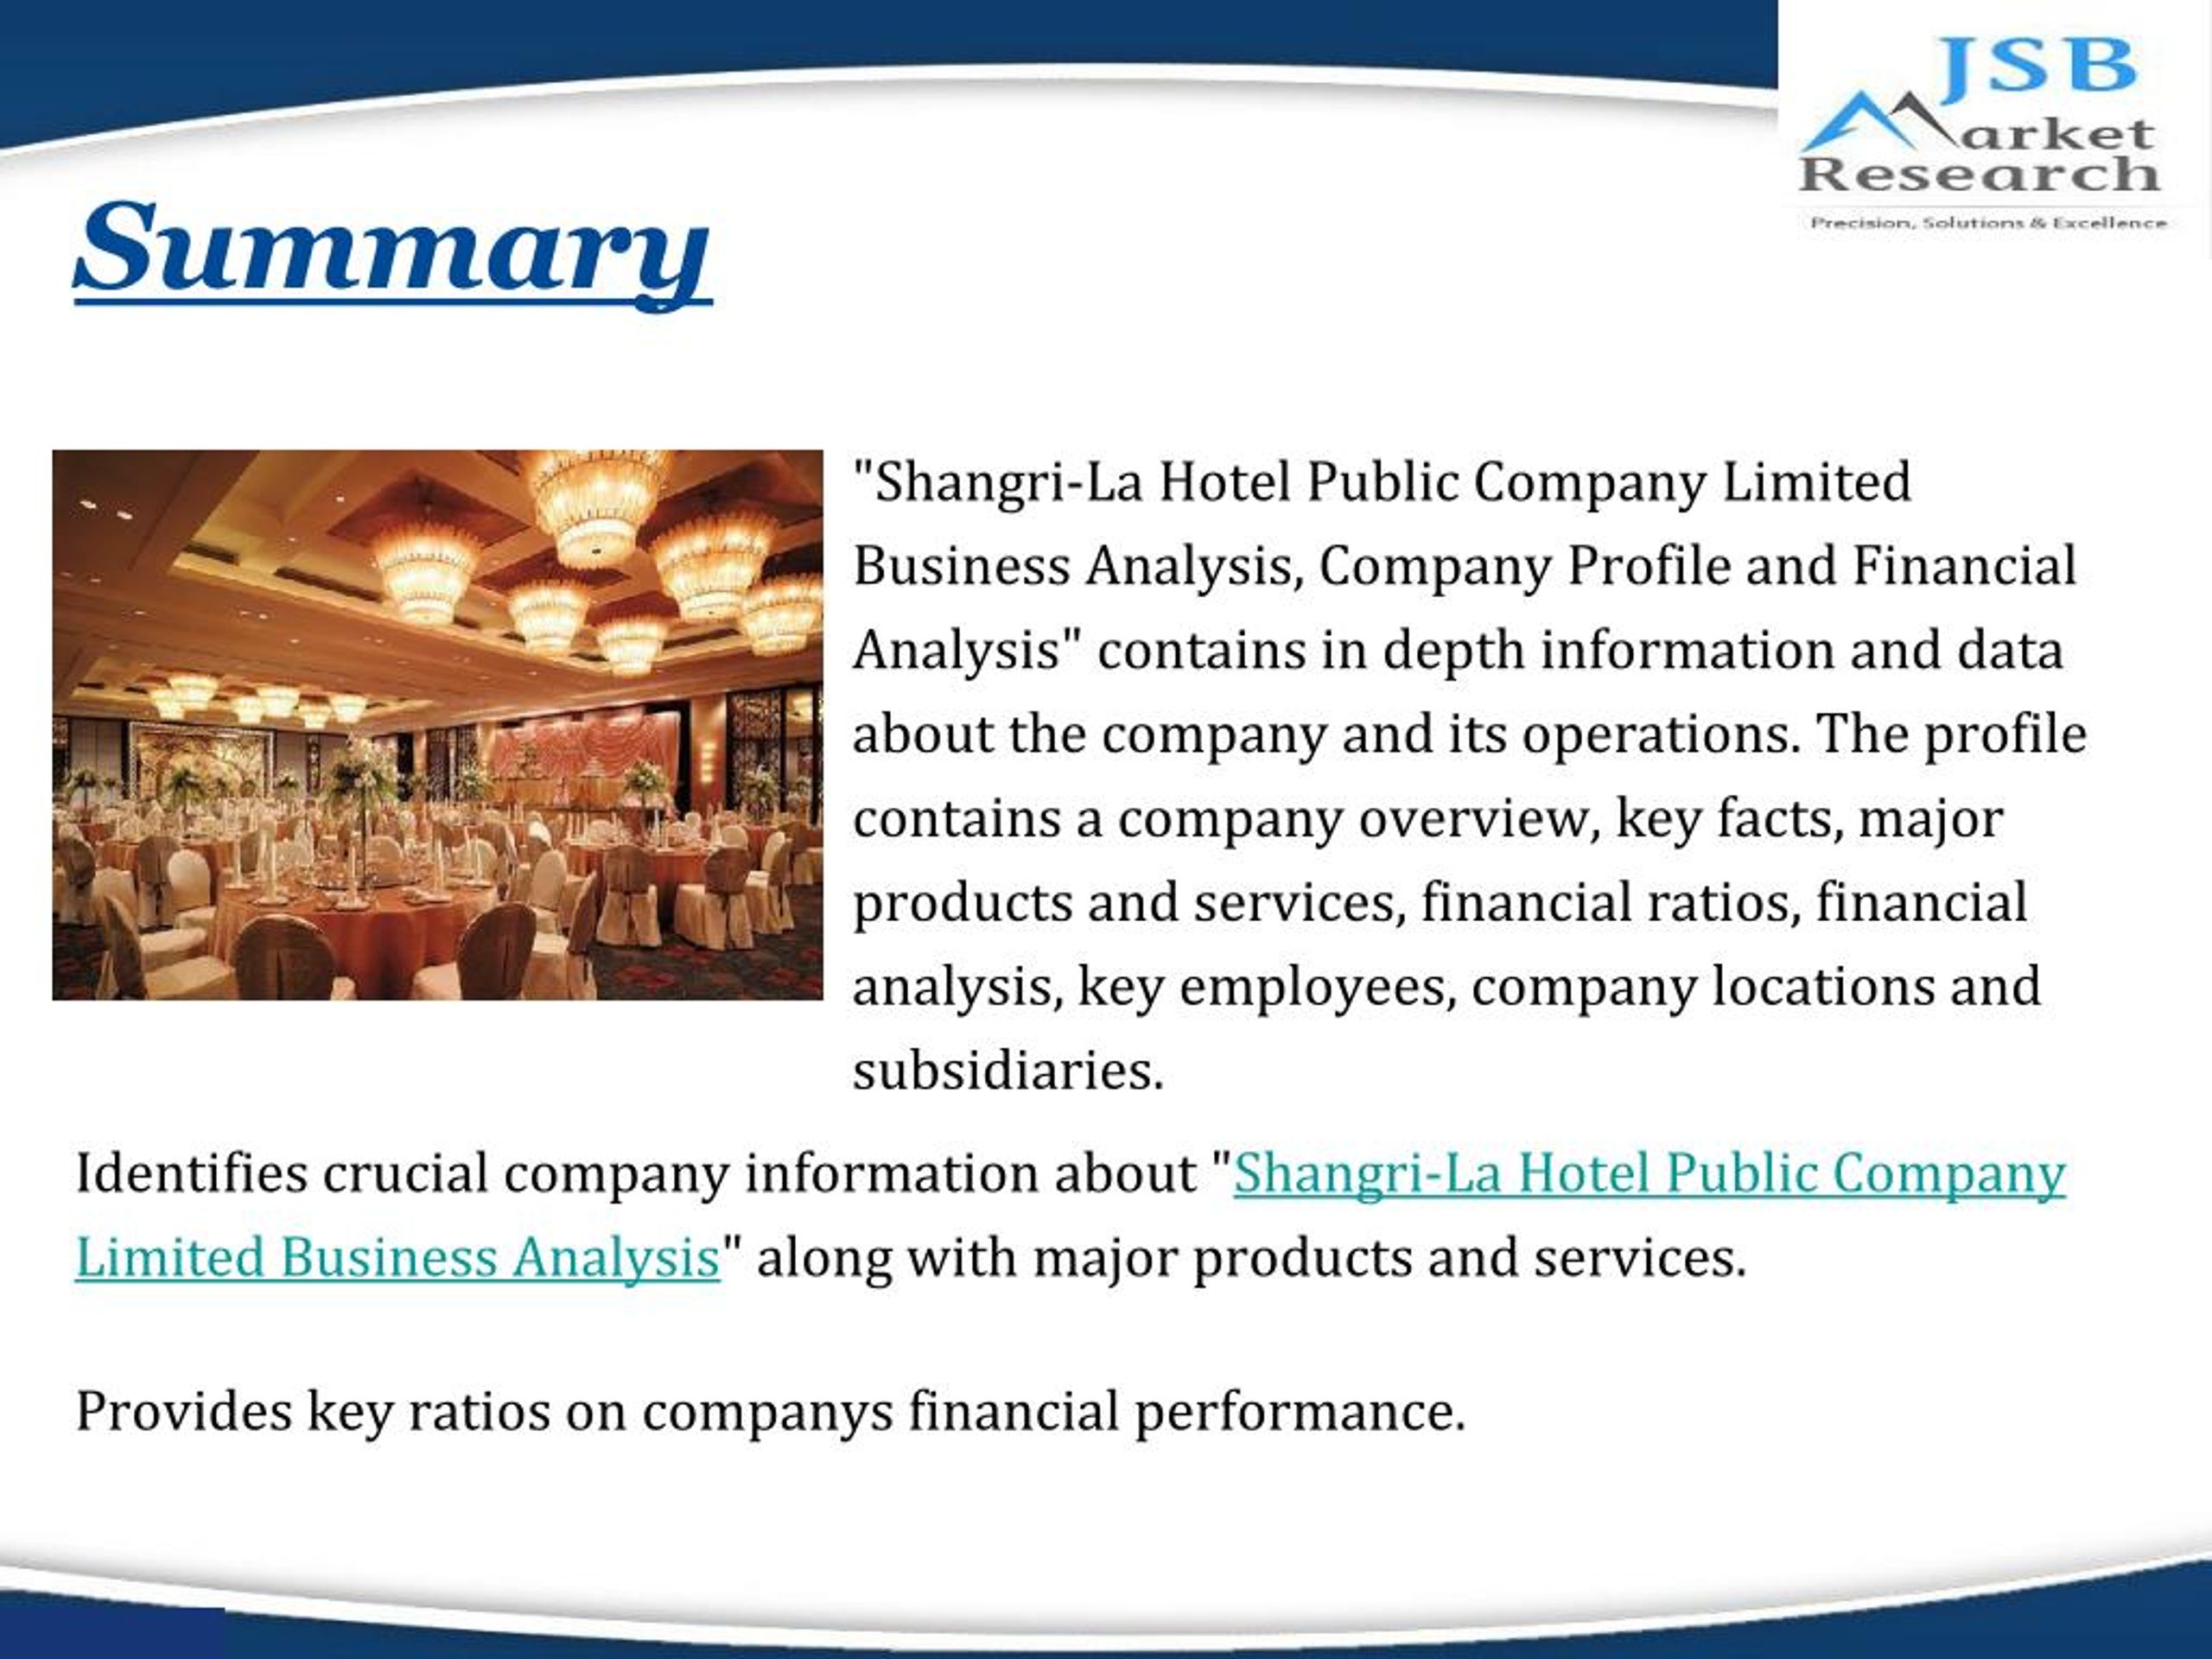 PPT ShangriLa Hotel Public Company Limited Business Analysis, C